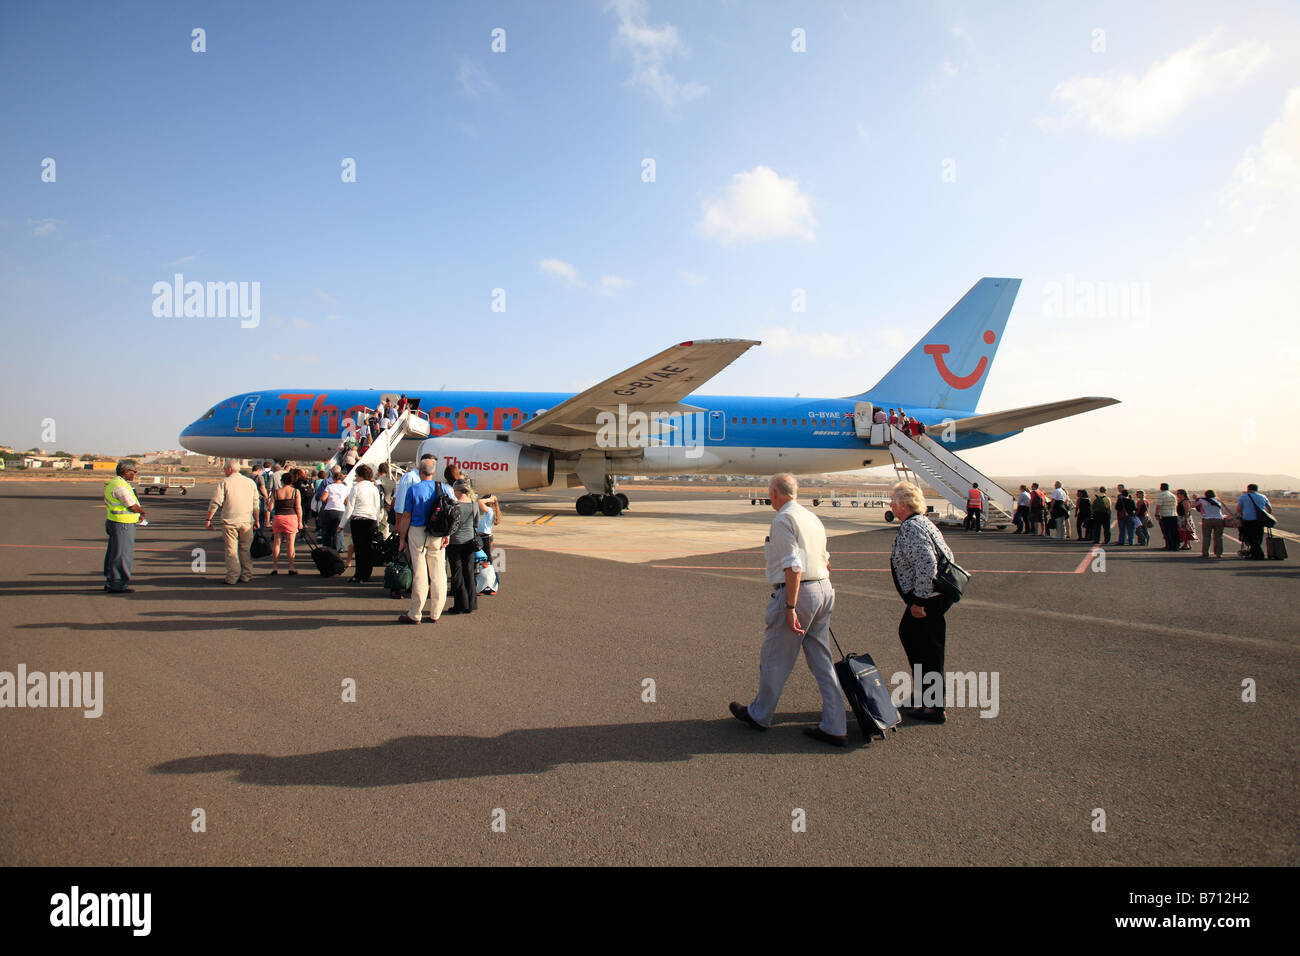 cape verde islands boa vista airport passengers boarding a thomson charter jet Alamy